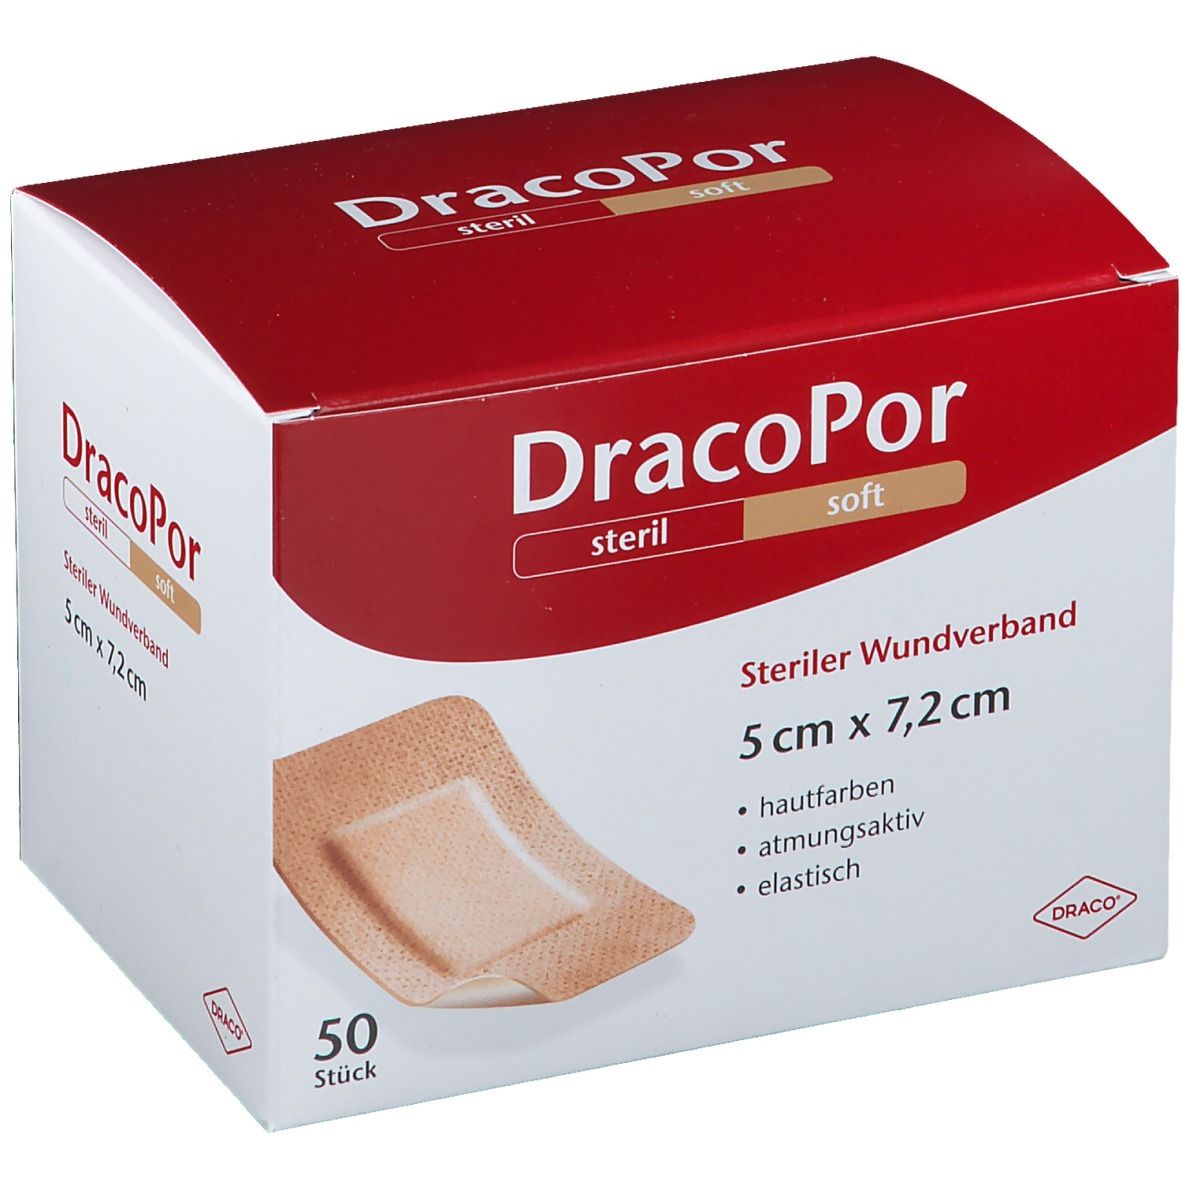 DracoPor Wundverband steril hatufarben 5 cm x 7,2 cm